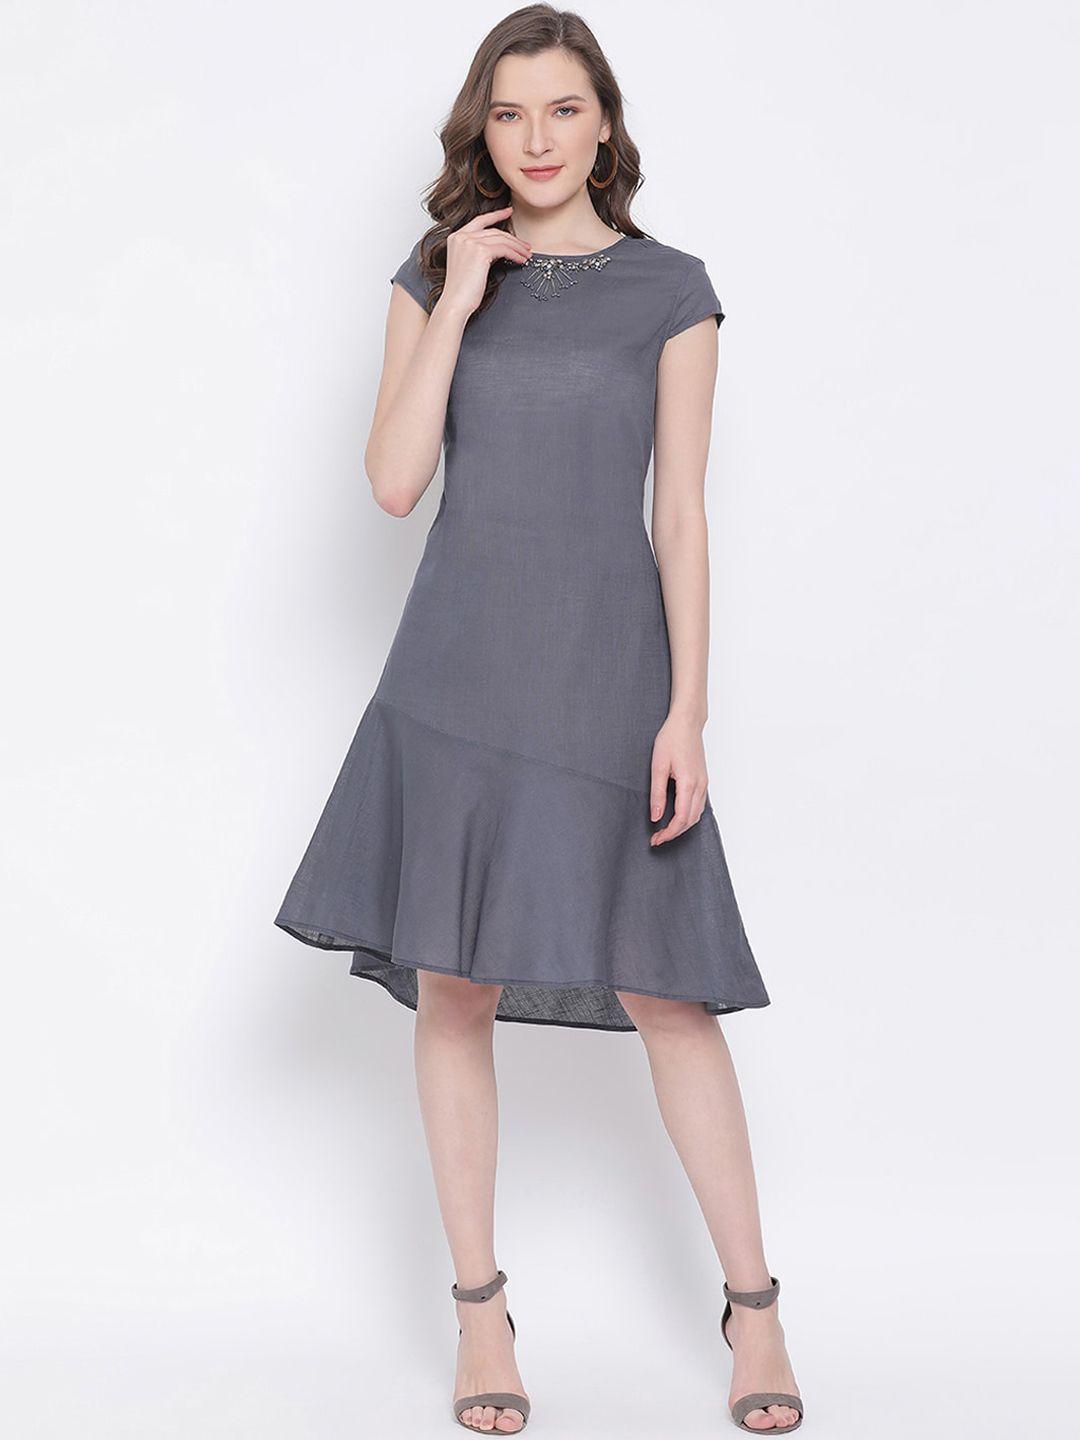 ly2 women grey embellished a-line dress